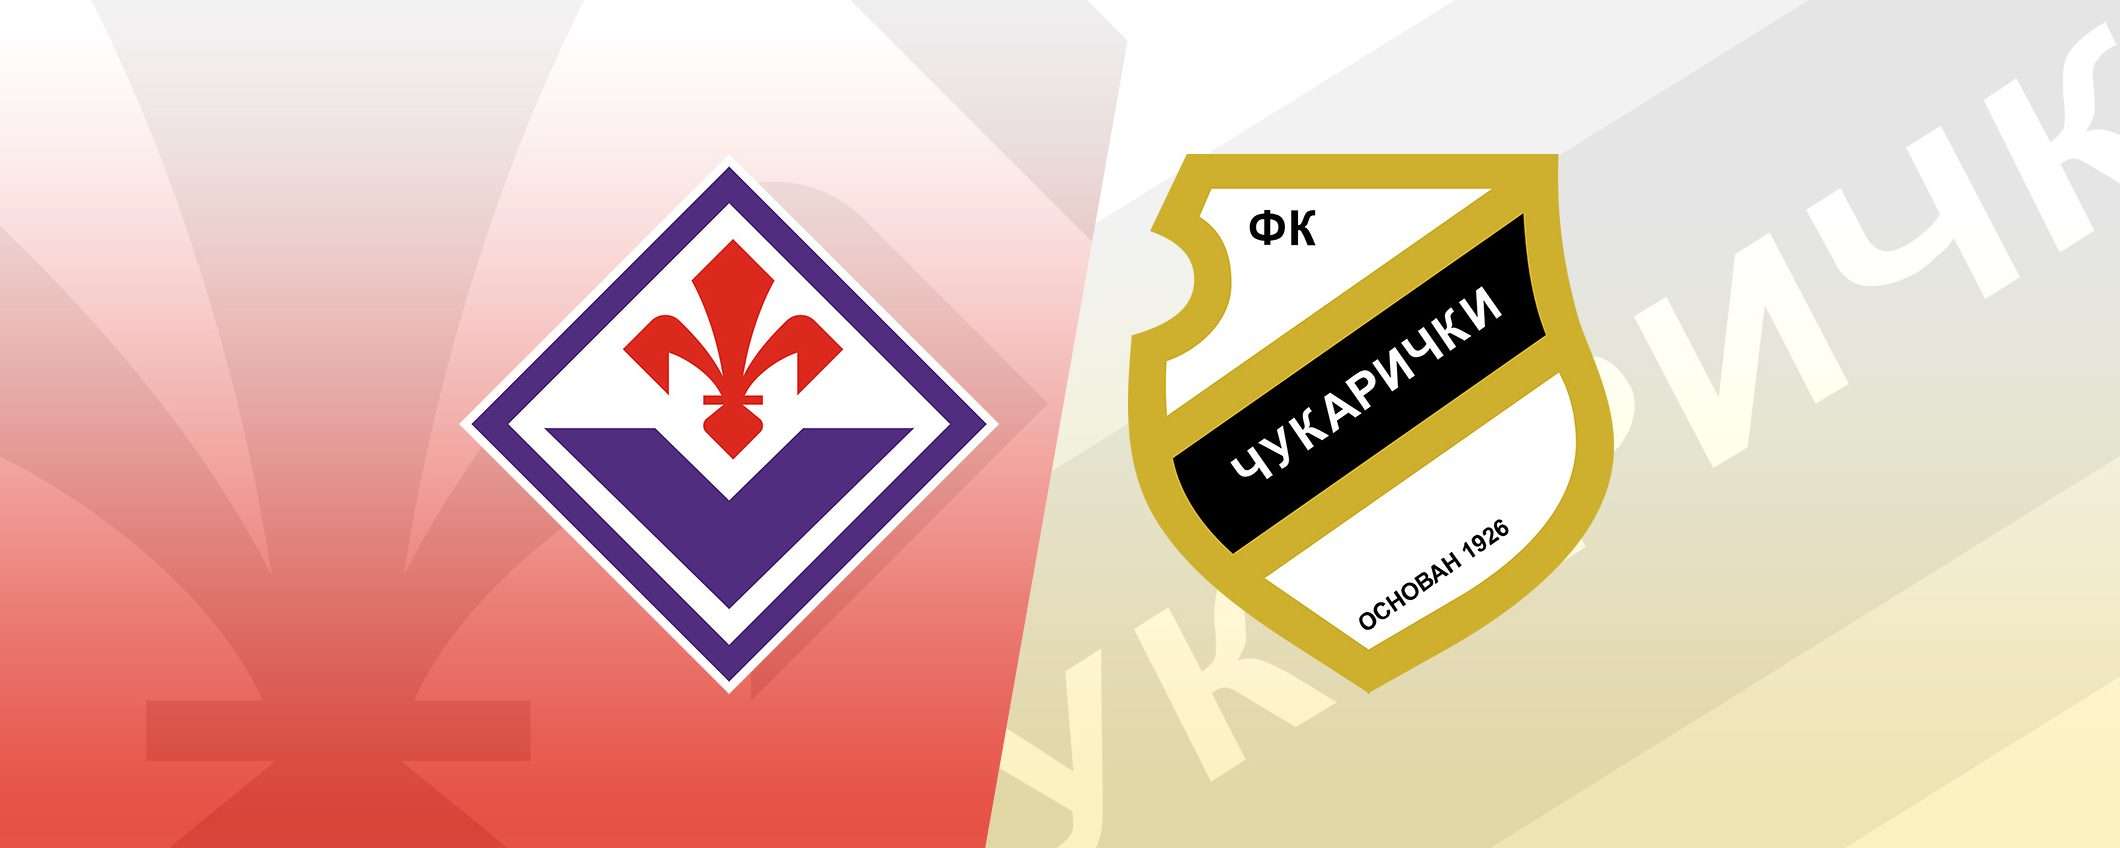 Come vedere Fiorentina-Cukaricki in streaming (Conference)